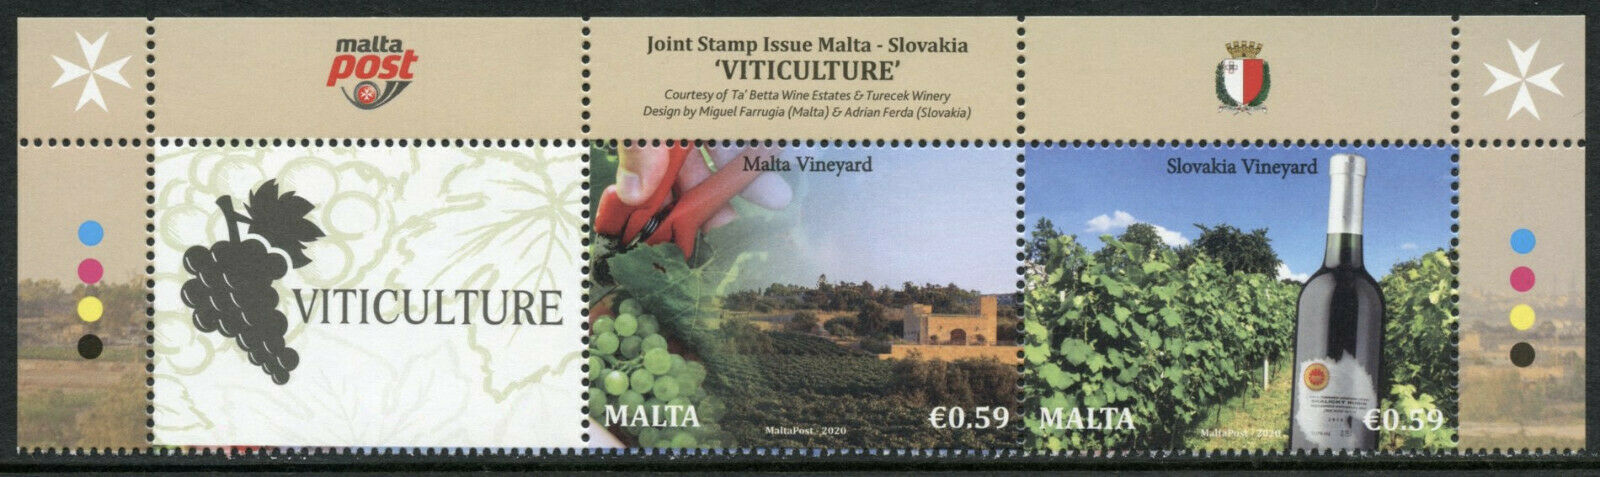 Malta Gastronomy Stamps 2020 MNH Viticulture JIS Slovakia Wines 2v Set + Label